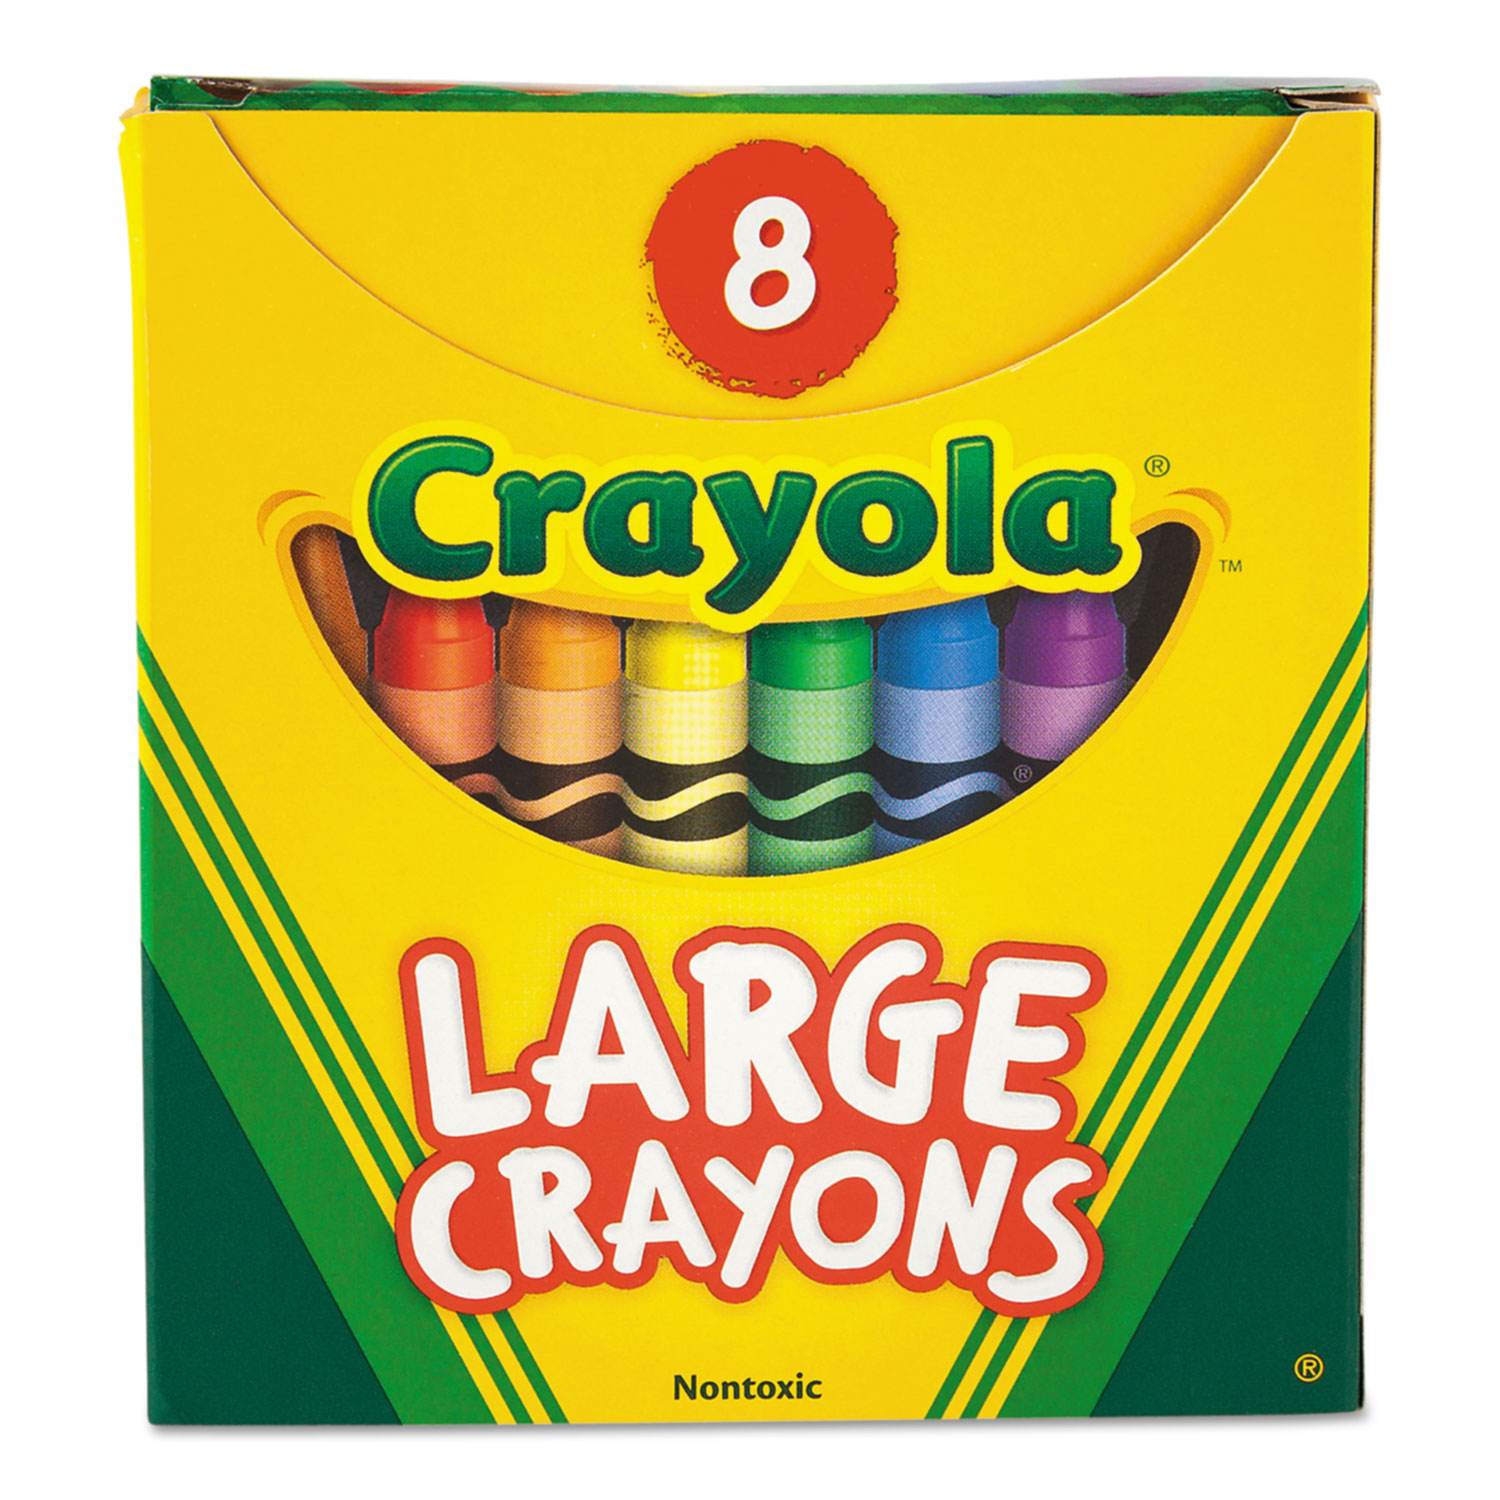 Vintage Crayola Jumbo Crayons 8 Large with original box, Made in